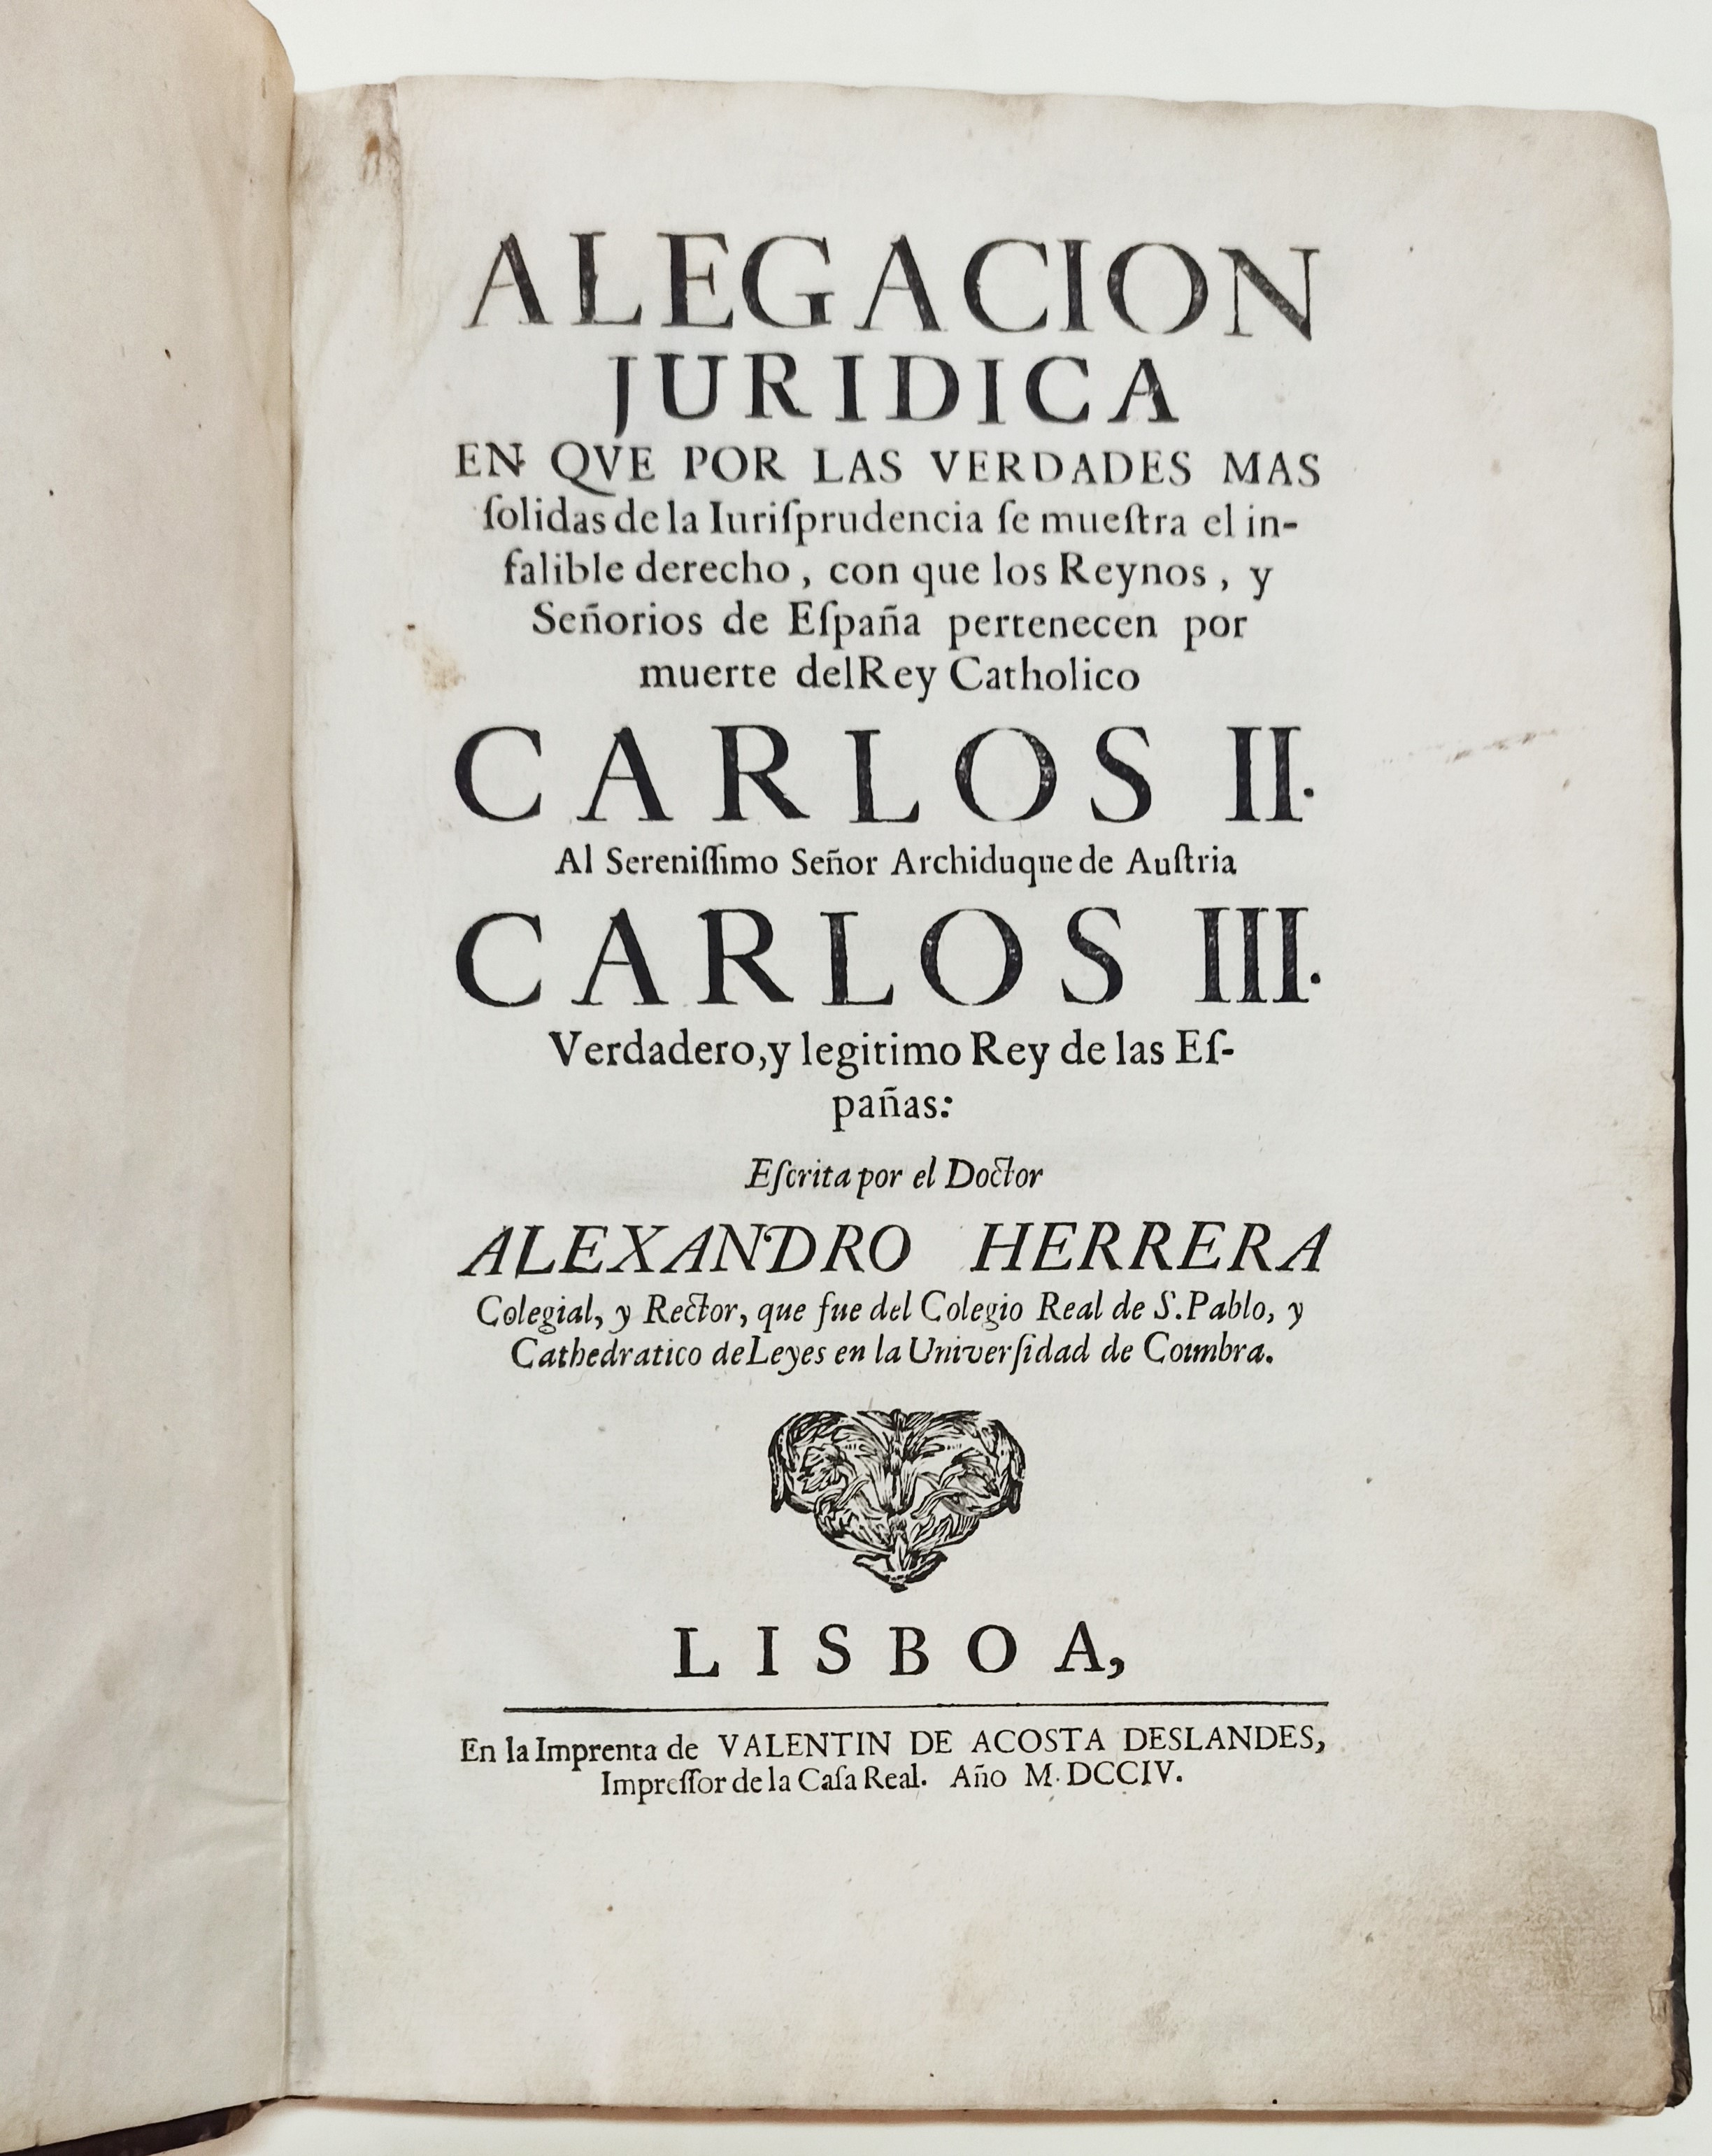 ALEGACION JURIDICA by Herrera, Alexandro: Very Good Hardcover